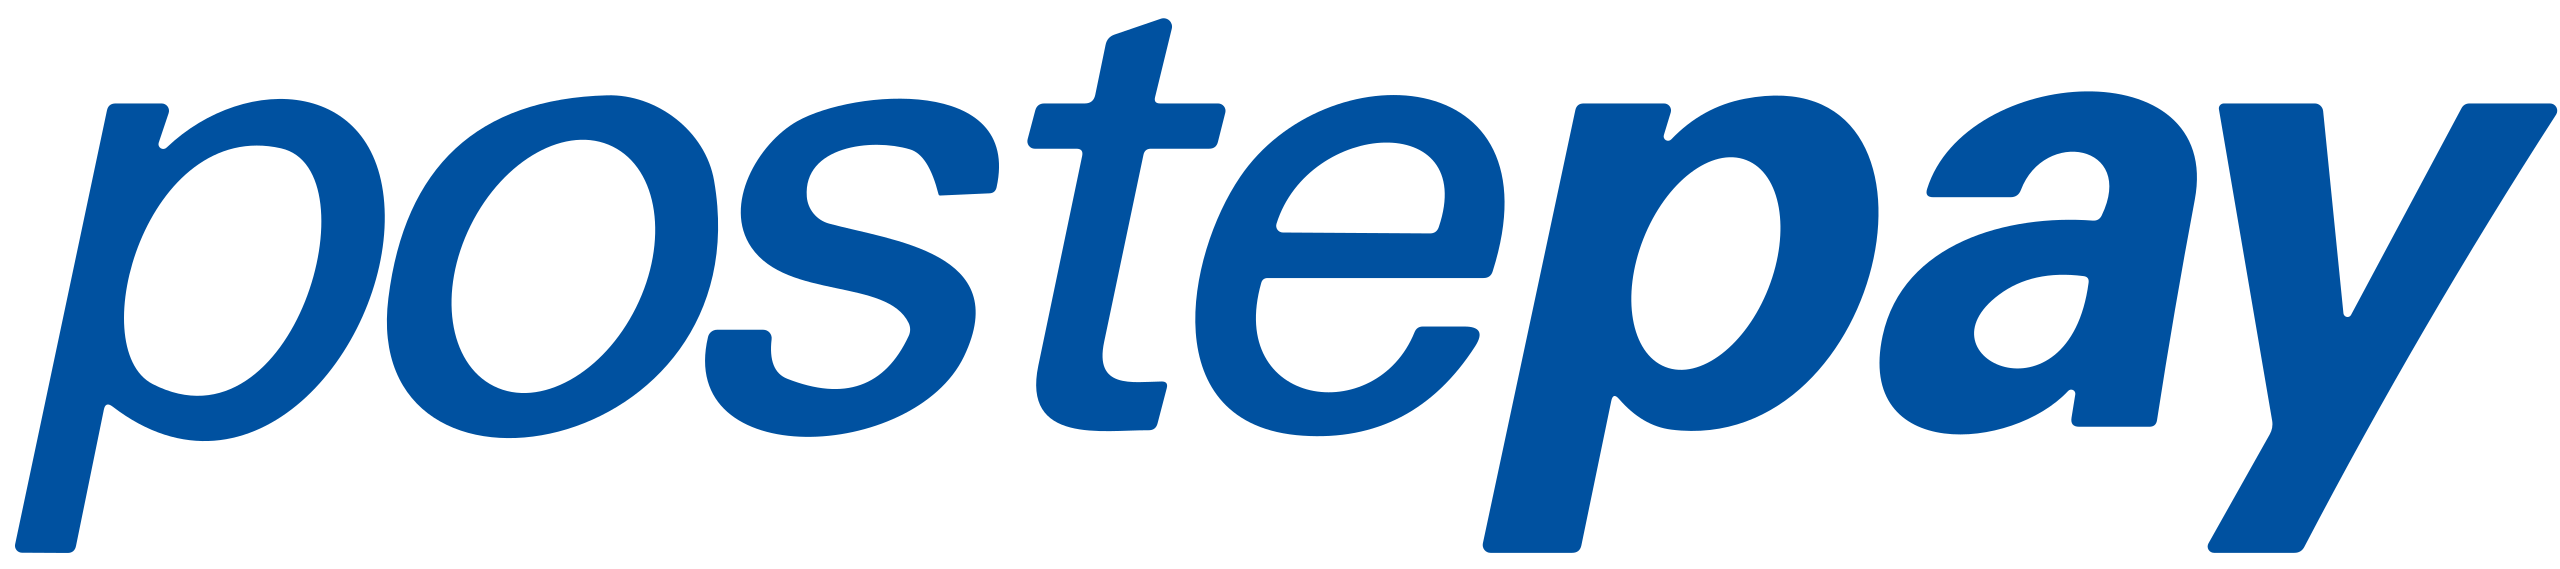 PostePay Evolution Logo.